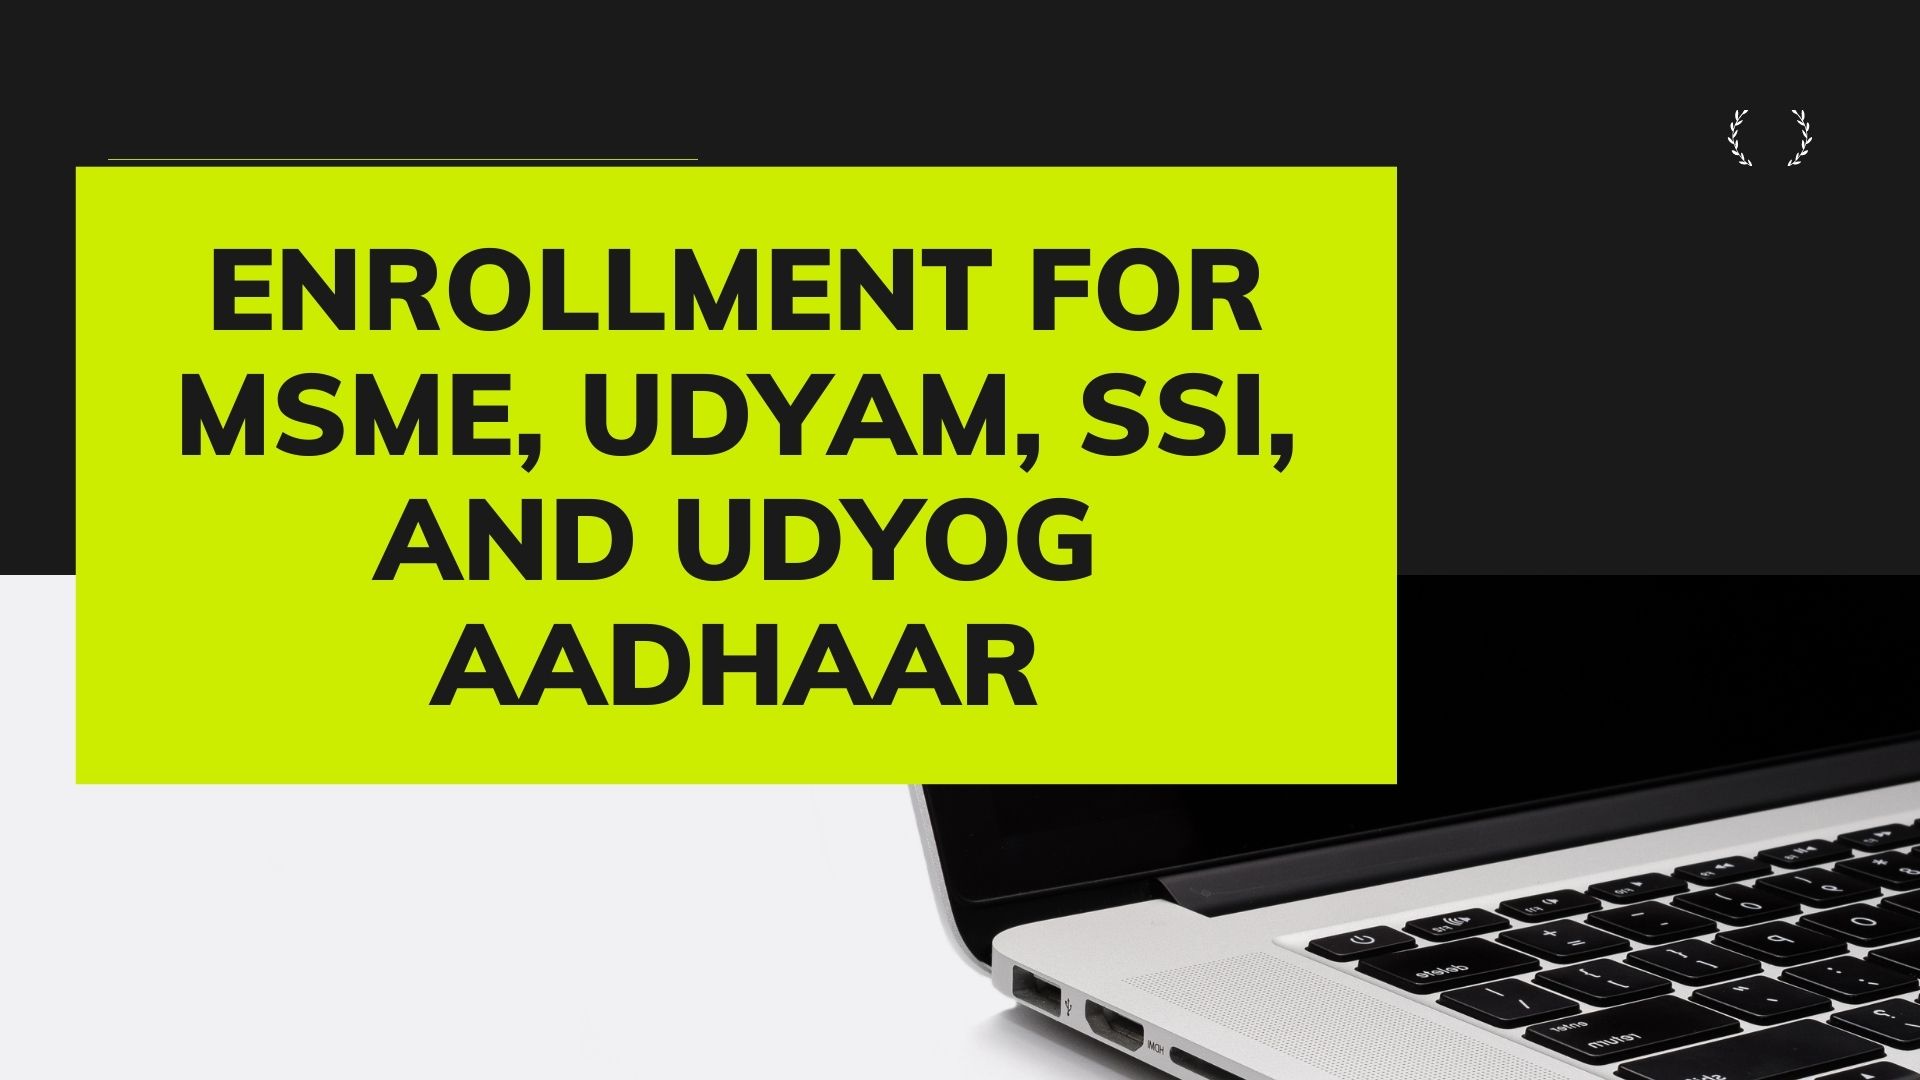 Registration for MSME, SSI, and Udyog Aadhaar